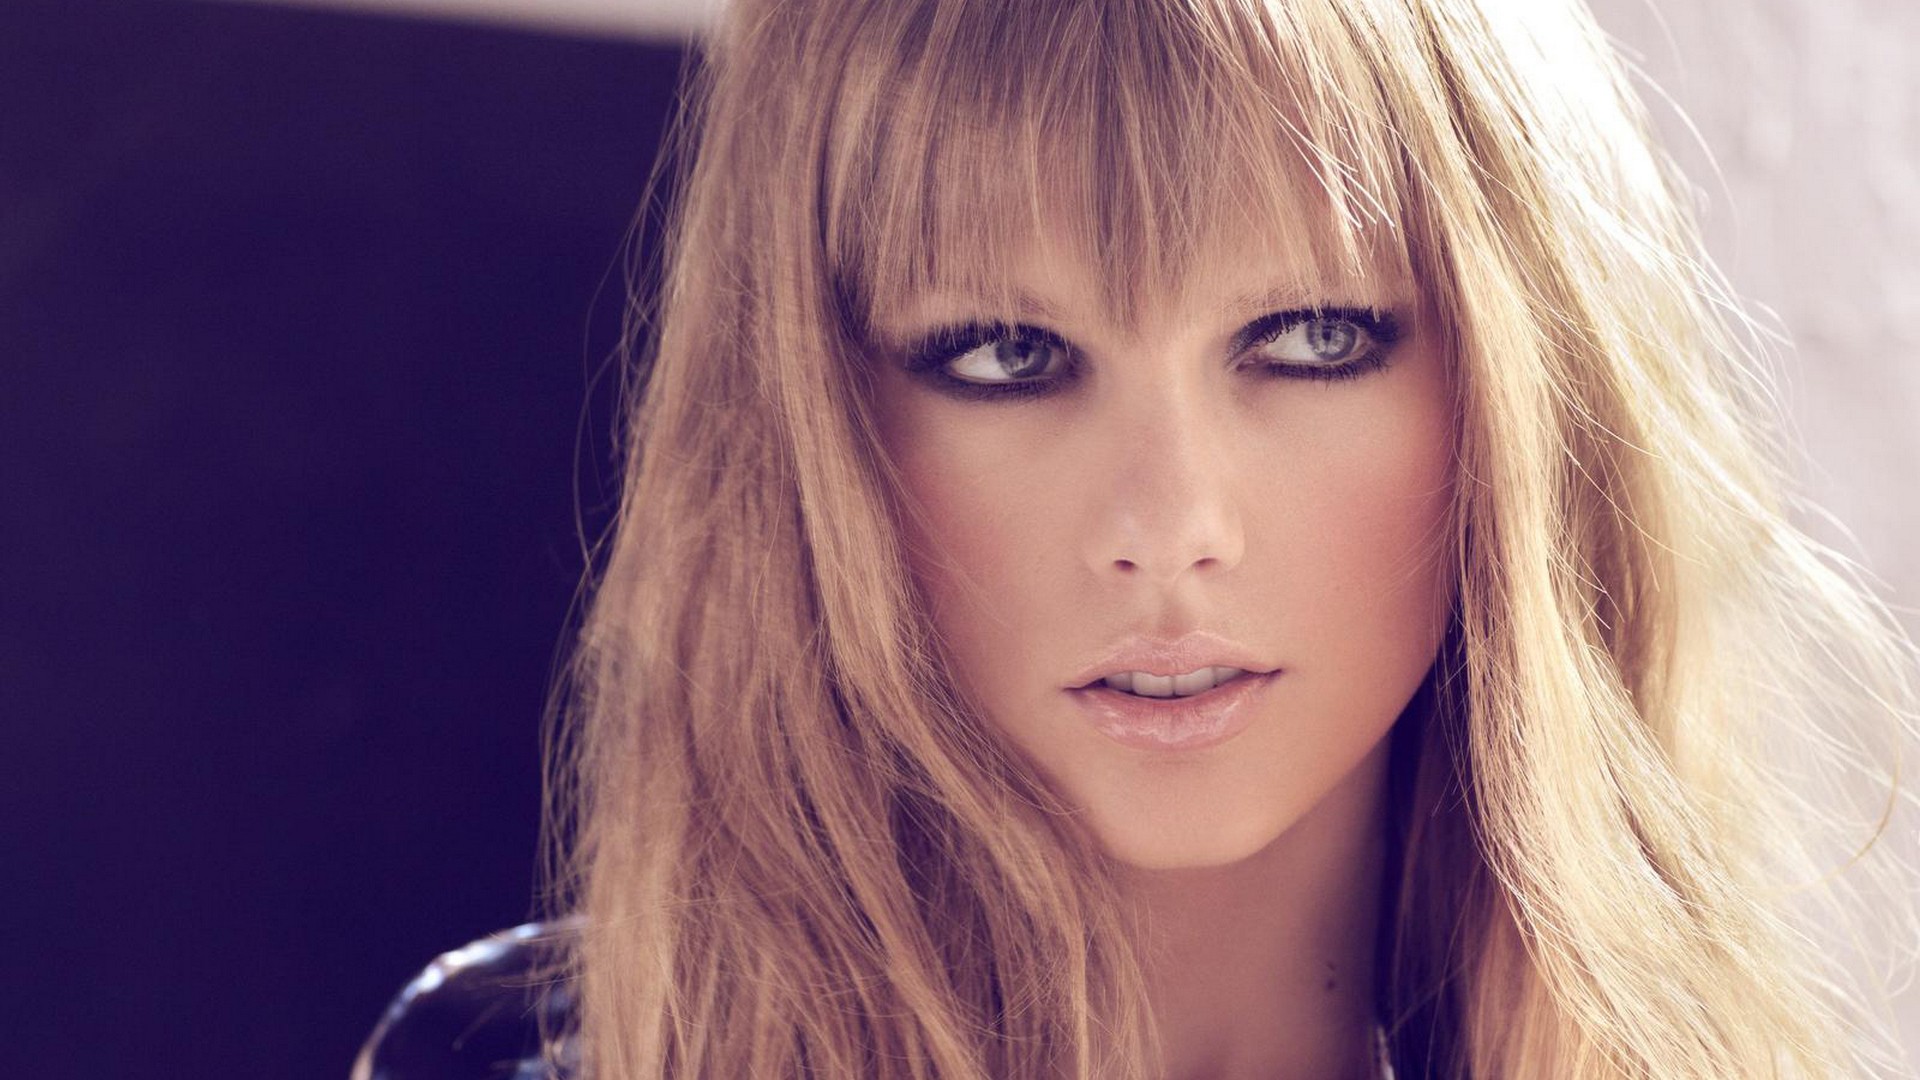 People 1920x1080 Taylor Swift women singer face closeup makeup dyed hair eyeliner gloss looking away celebrity